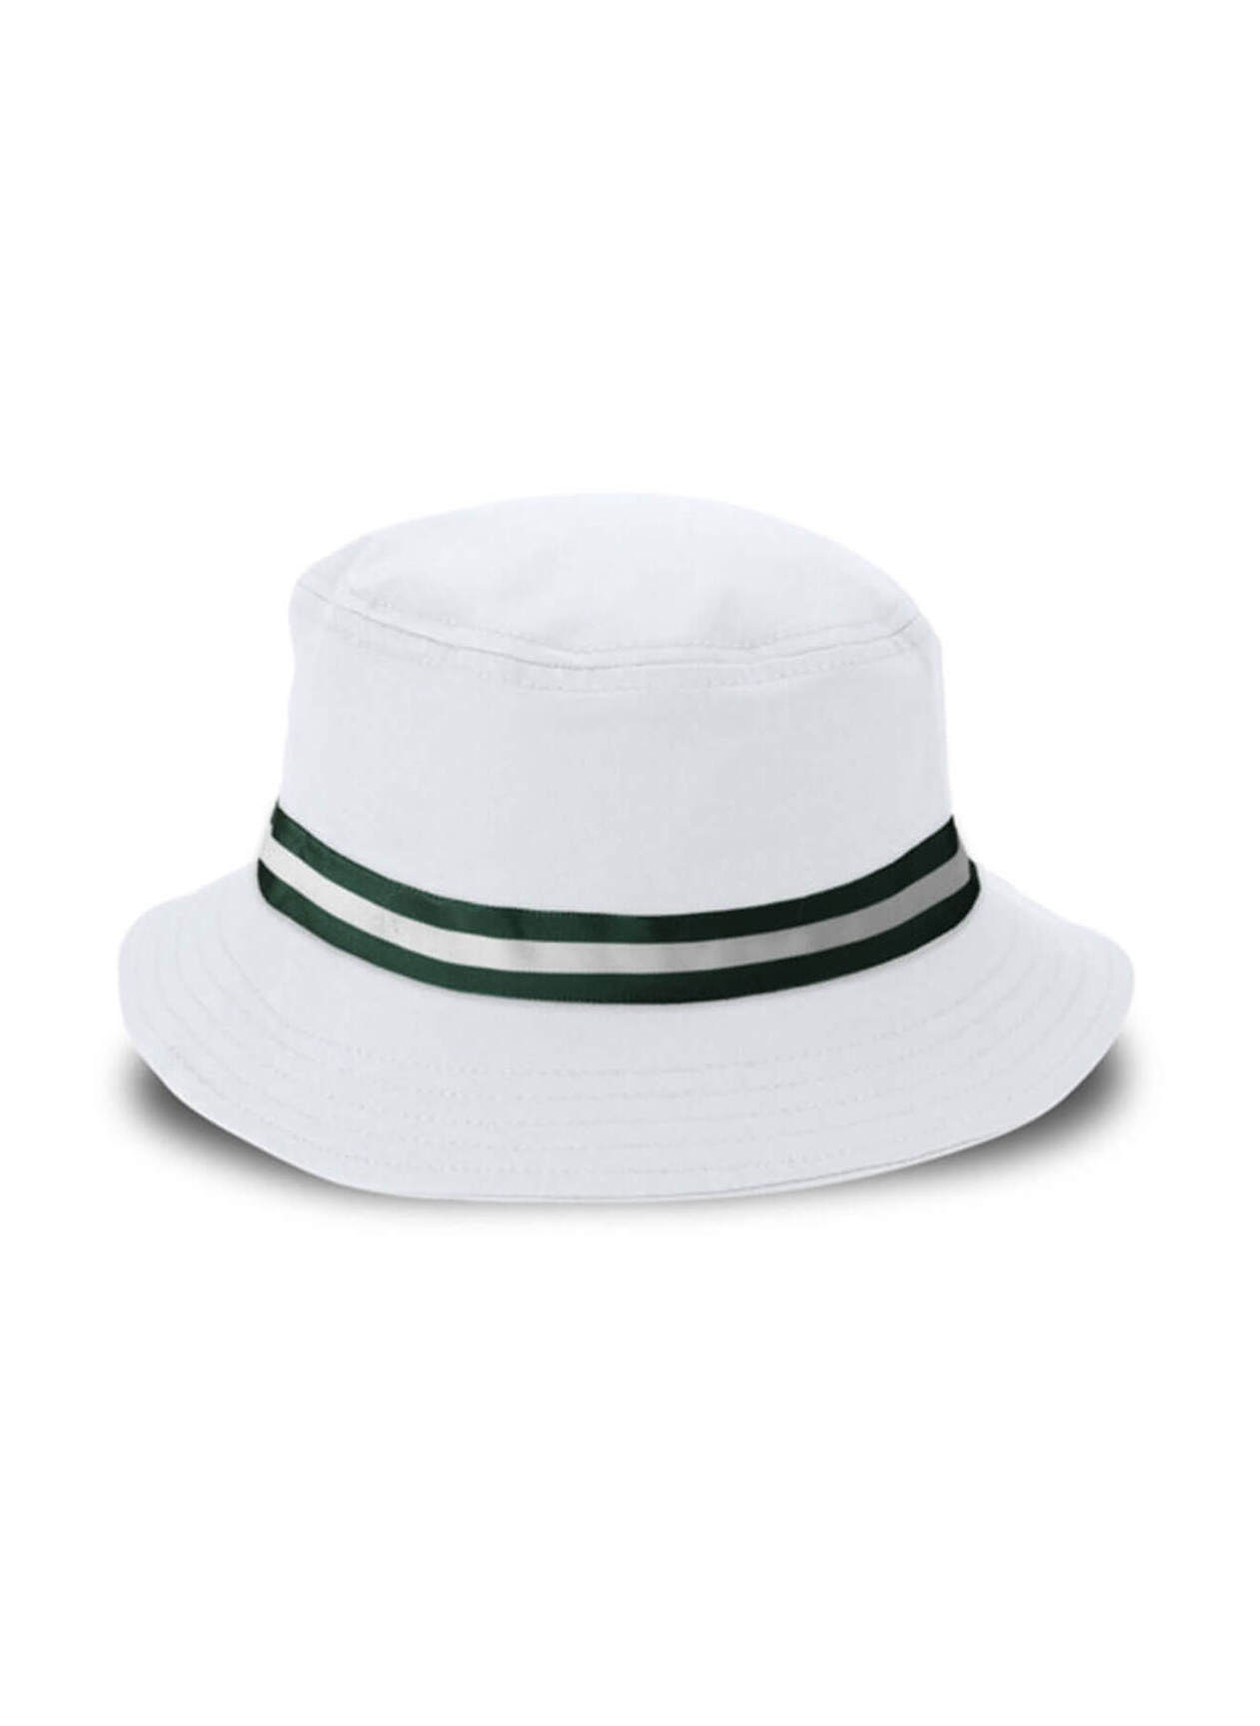 Imperial White / Dark Green The Oxford Bucket Hat